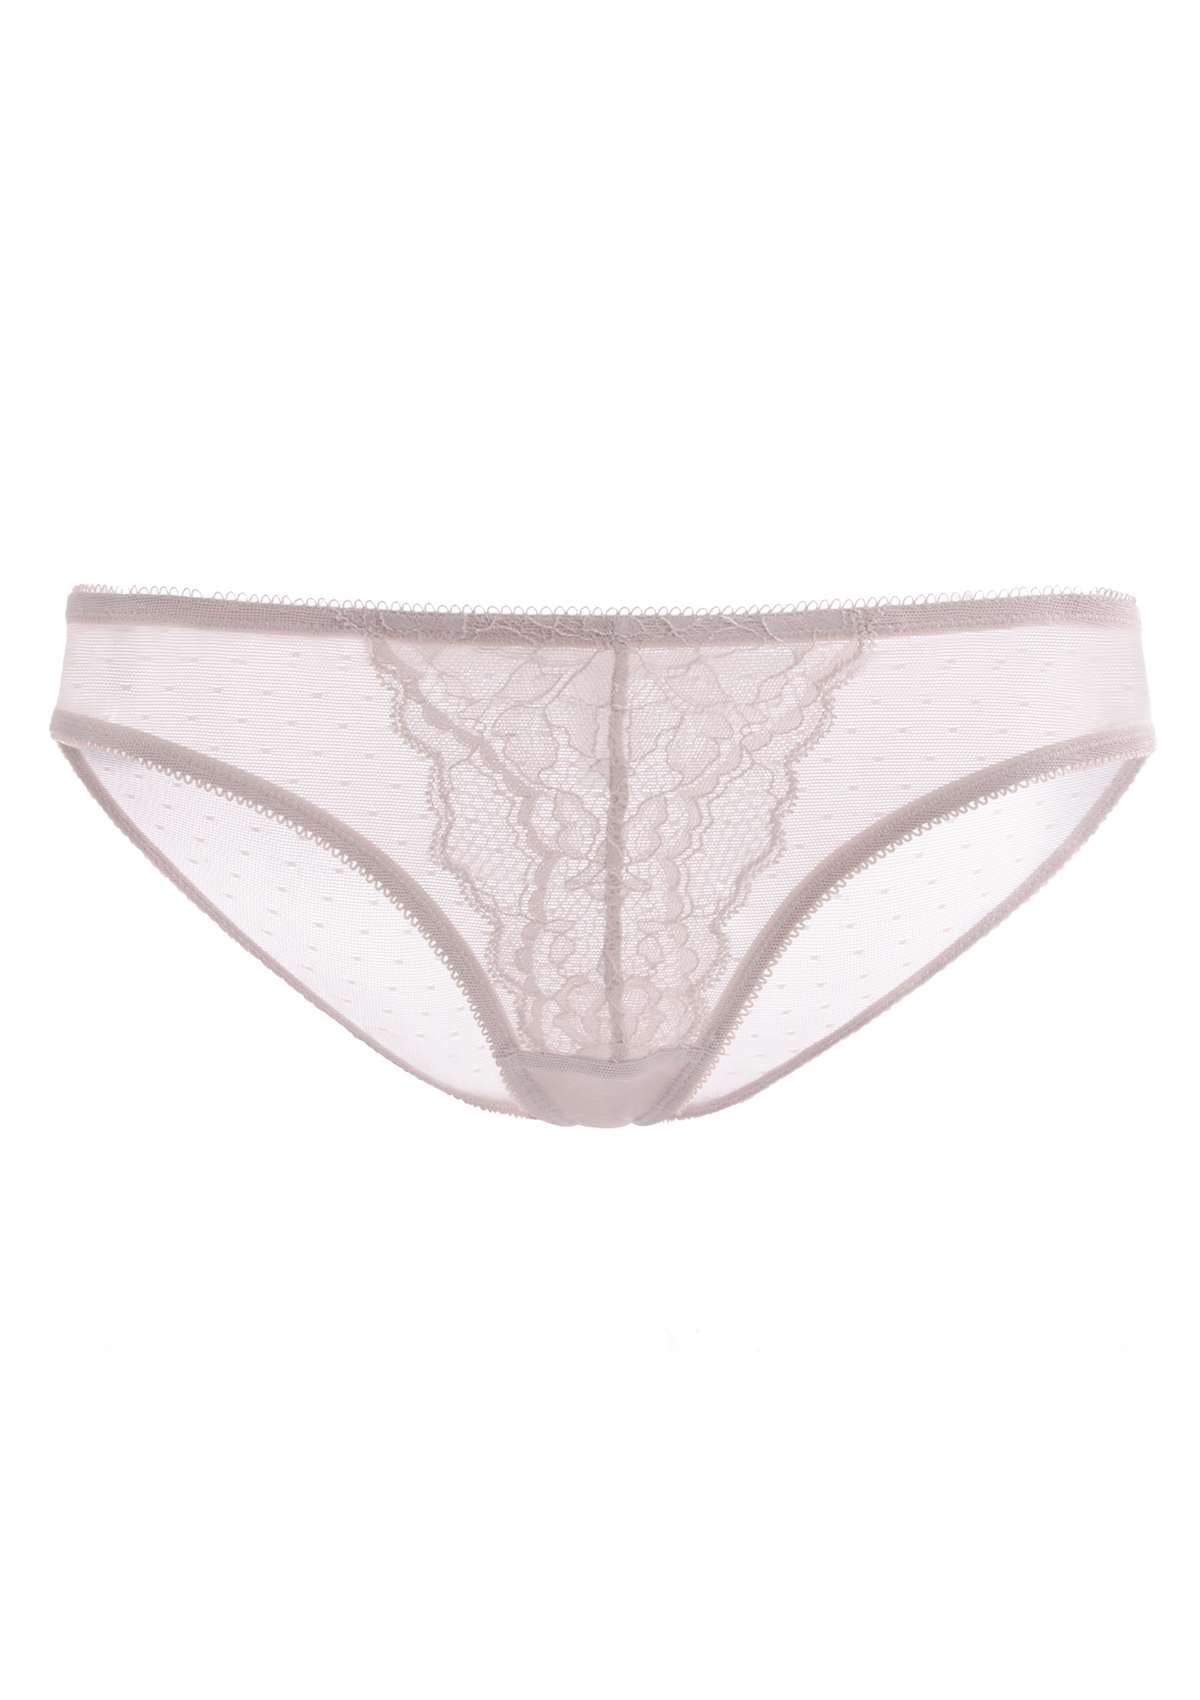 HSIA Enchante Sheer Lace Mesh Mid Rise Bikini Underwear - XXXL / Light Coral